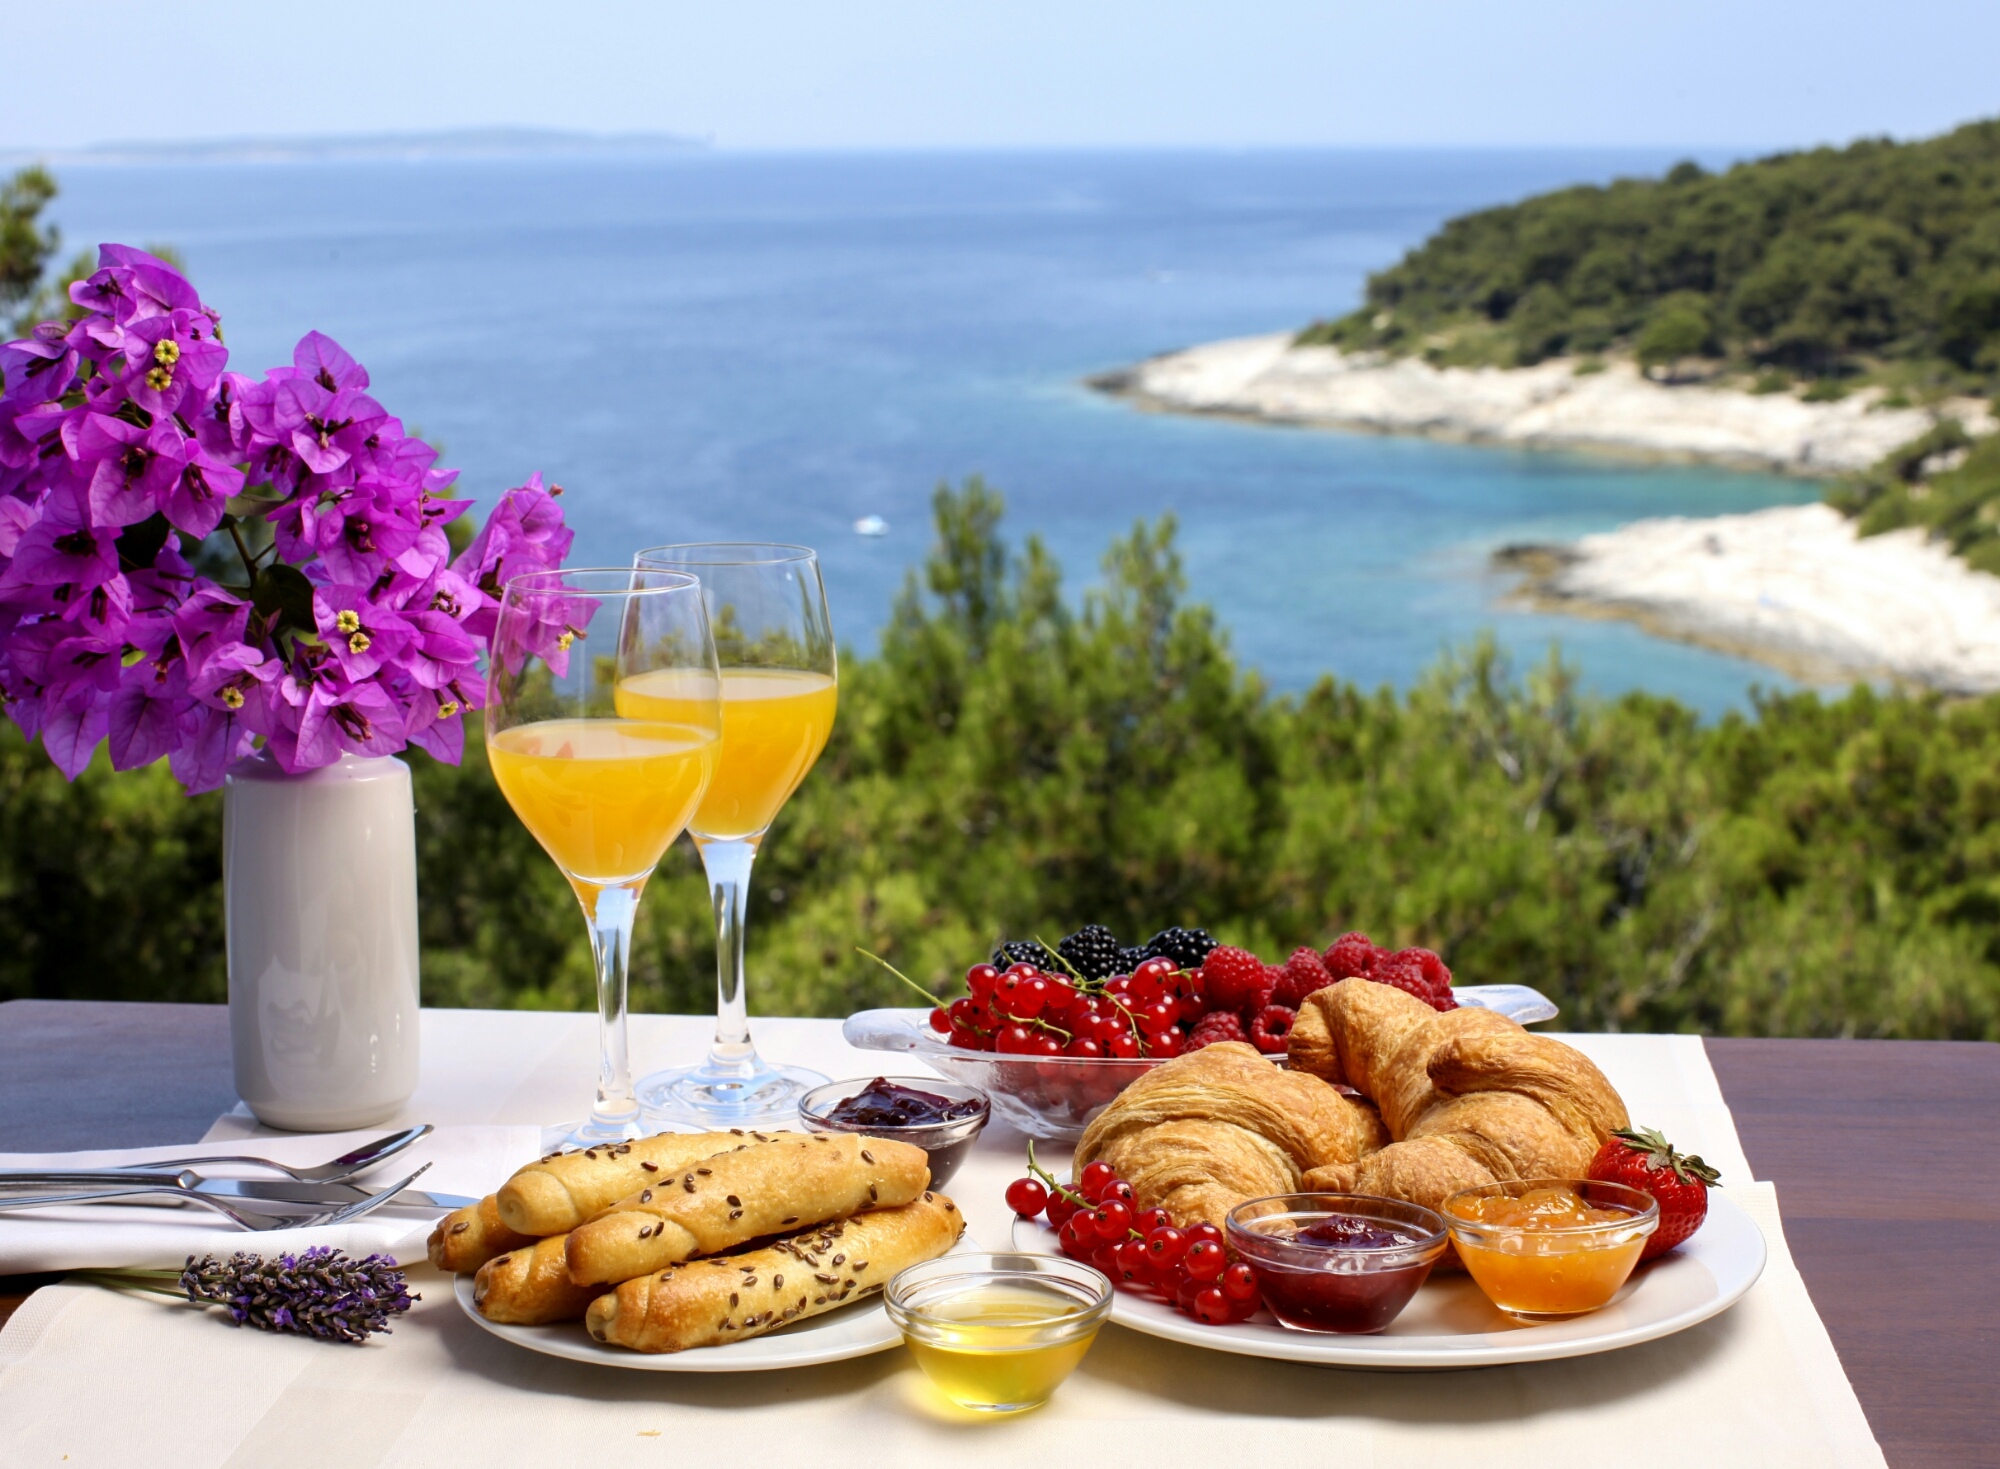 Красивая картинка море утро. Завтрак с видом на море. Столик с видом на море. Столик у моря. Красивый завтрак с видом.